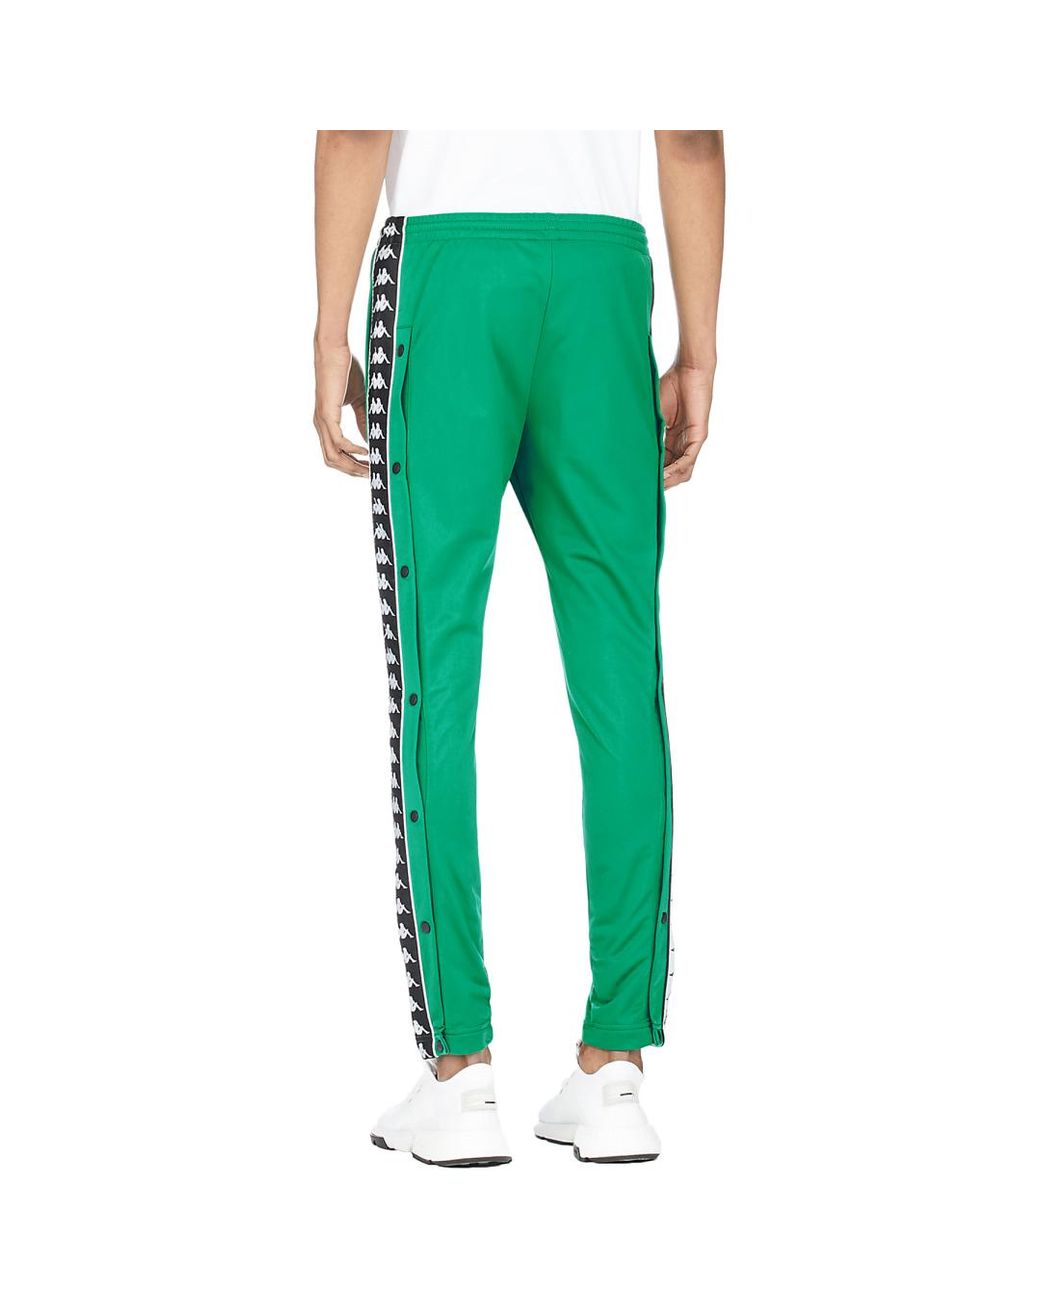 Kappa Synthetic 222 Banda Astoria Slim Snap Track Pants in Green/Black/White  (Green) for Men - Lyst